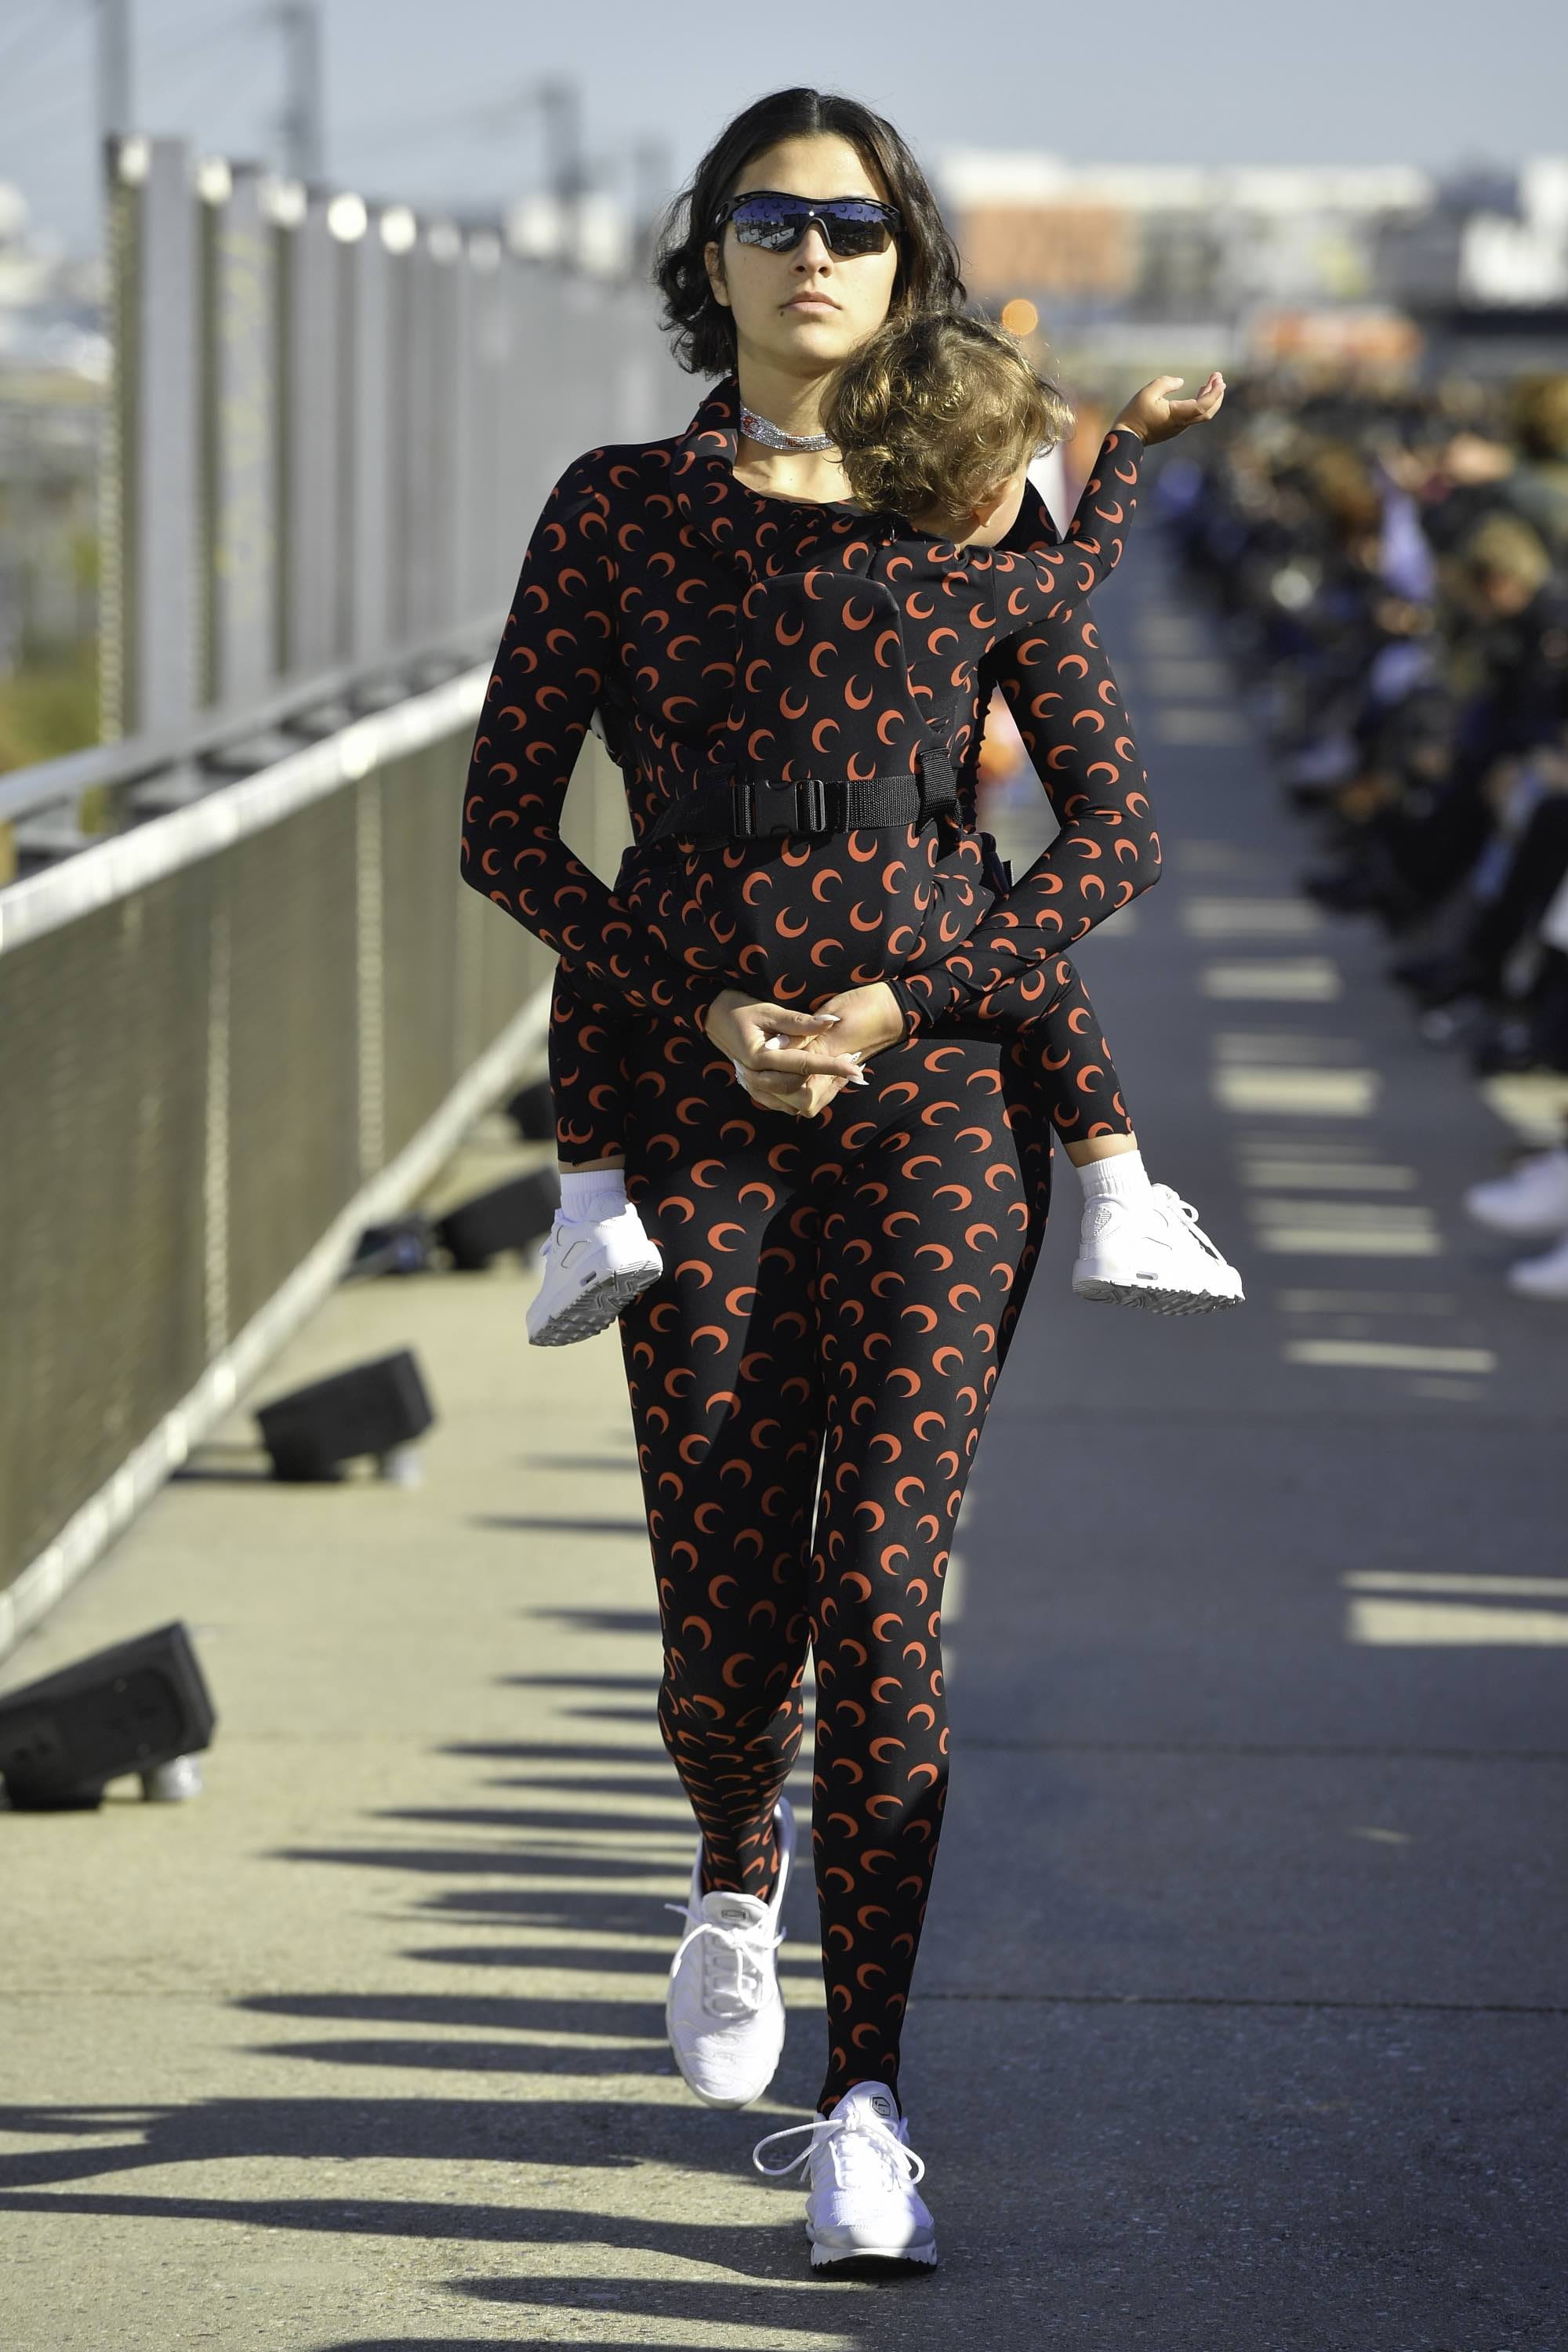 Brock Collection S/S19 womenswear #17 - Tagwalk: The Fashion